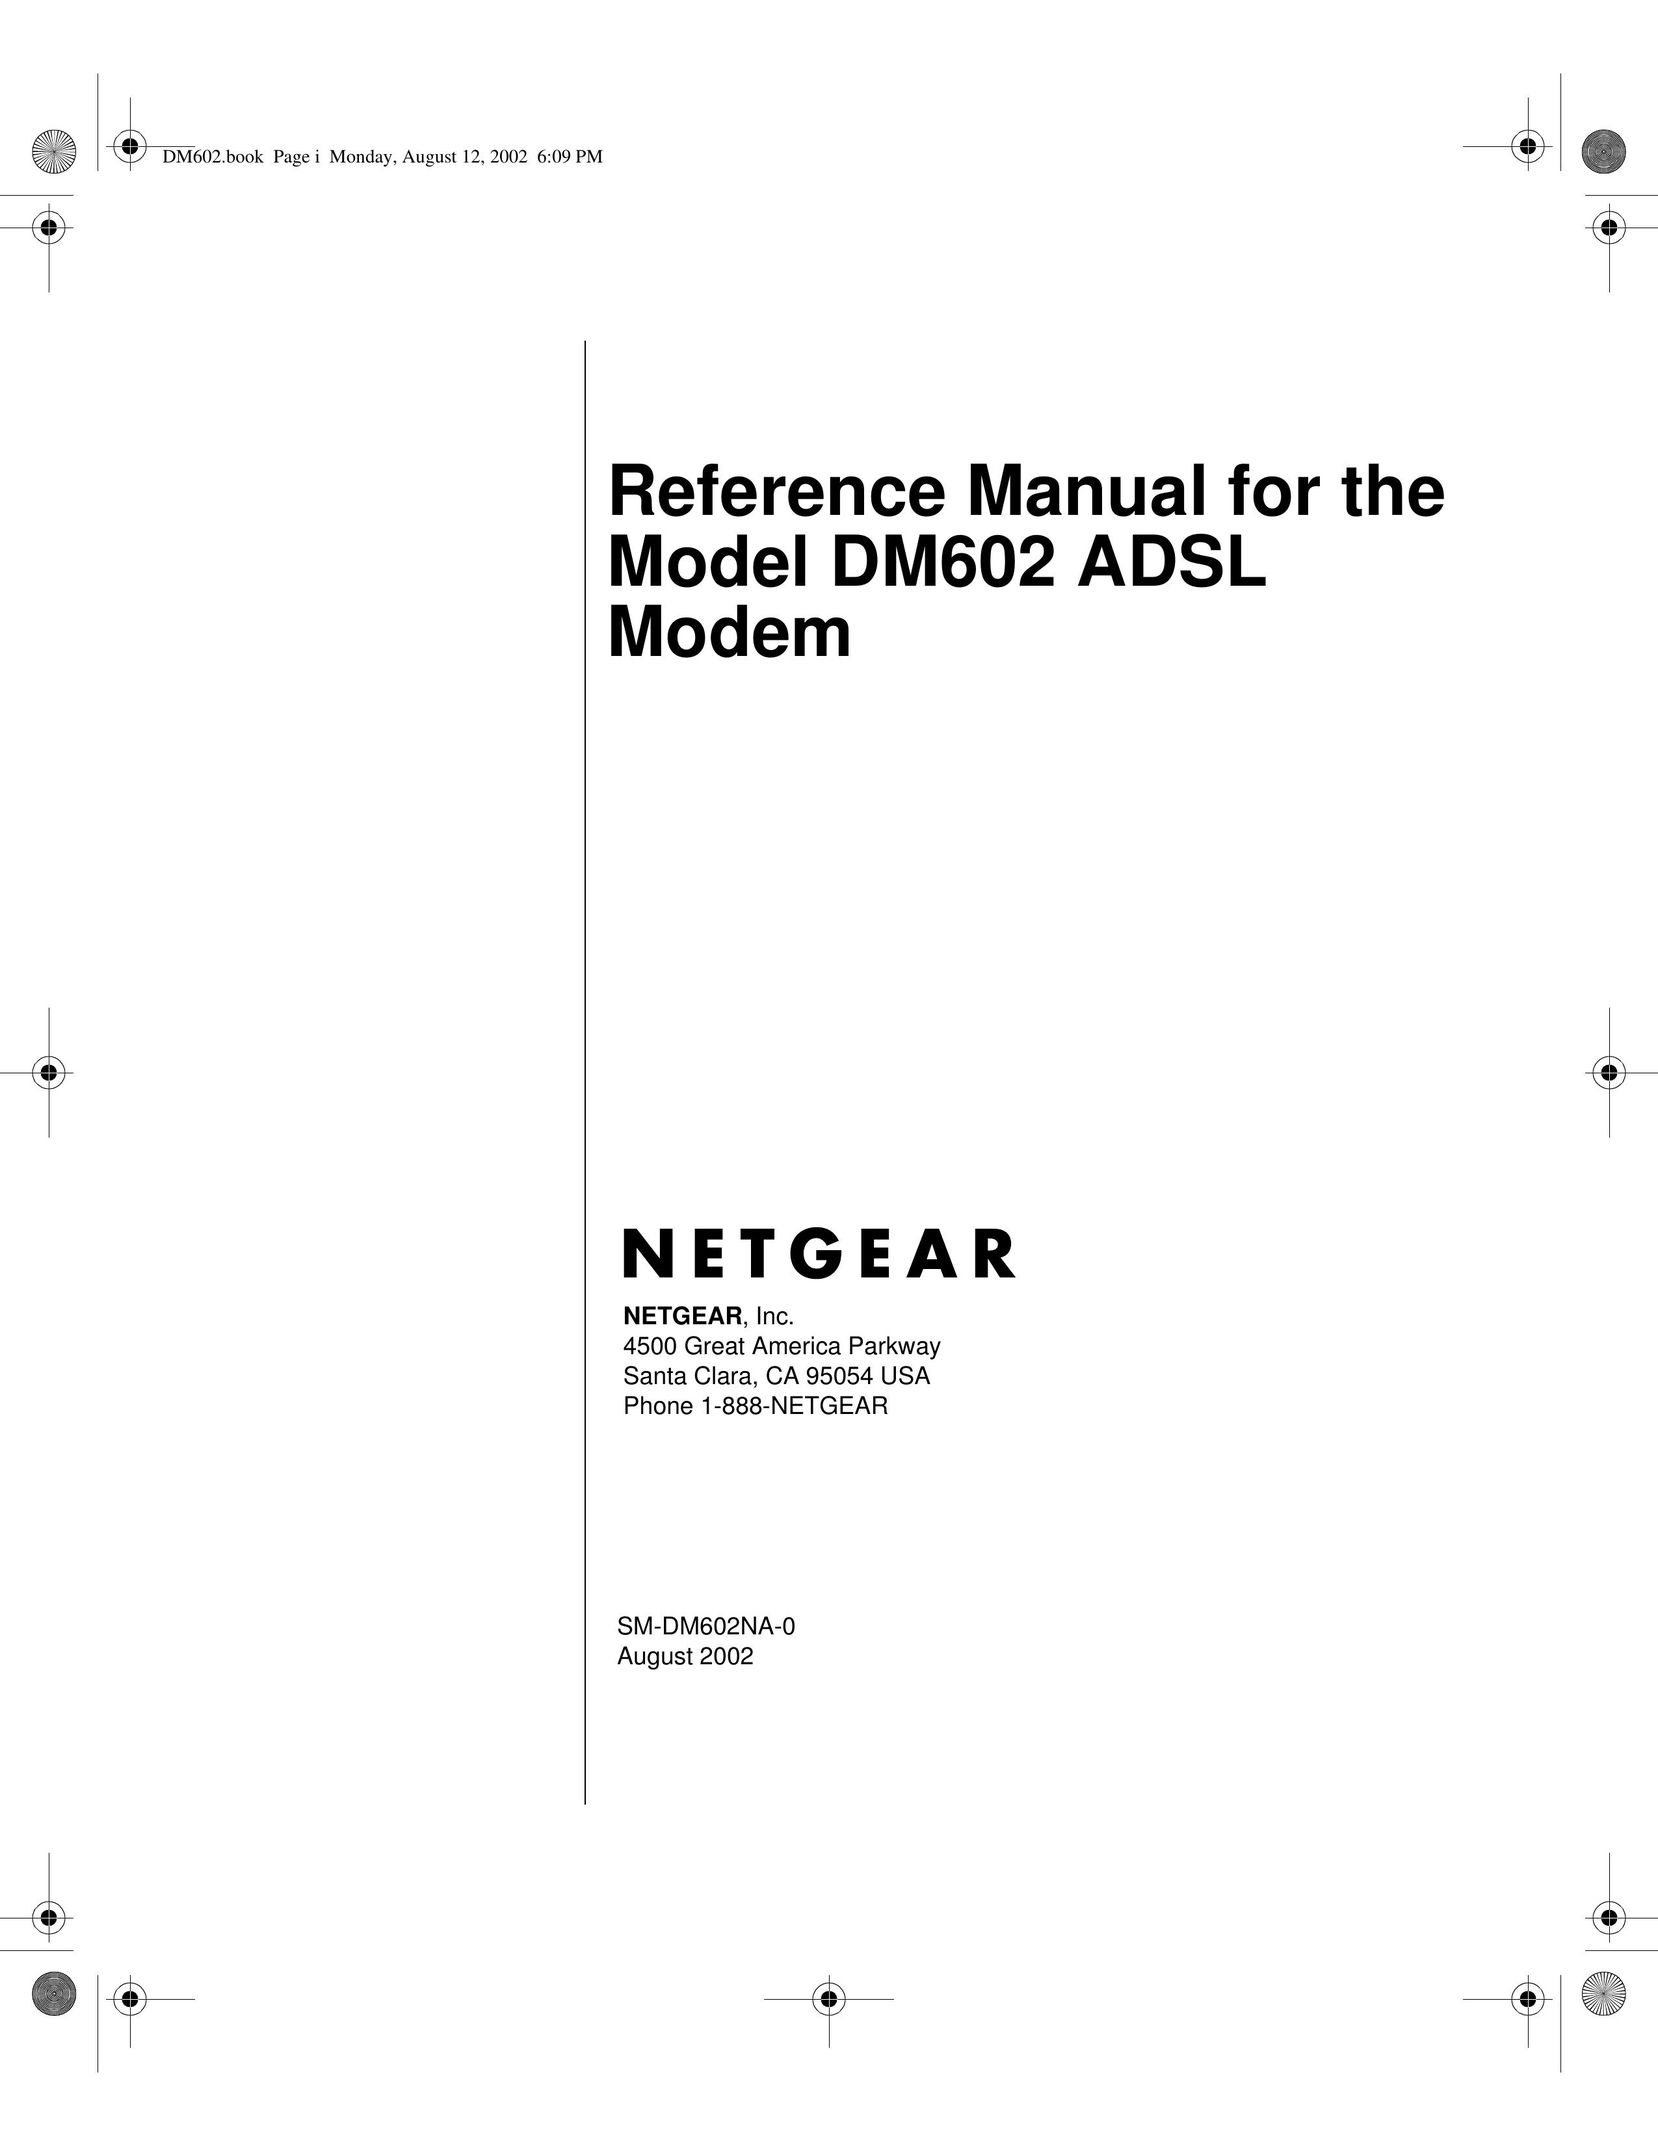 NETGEAR DM602 Modem User Manual